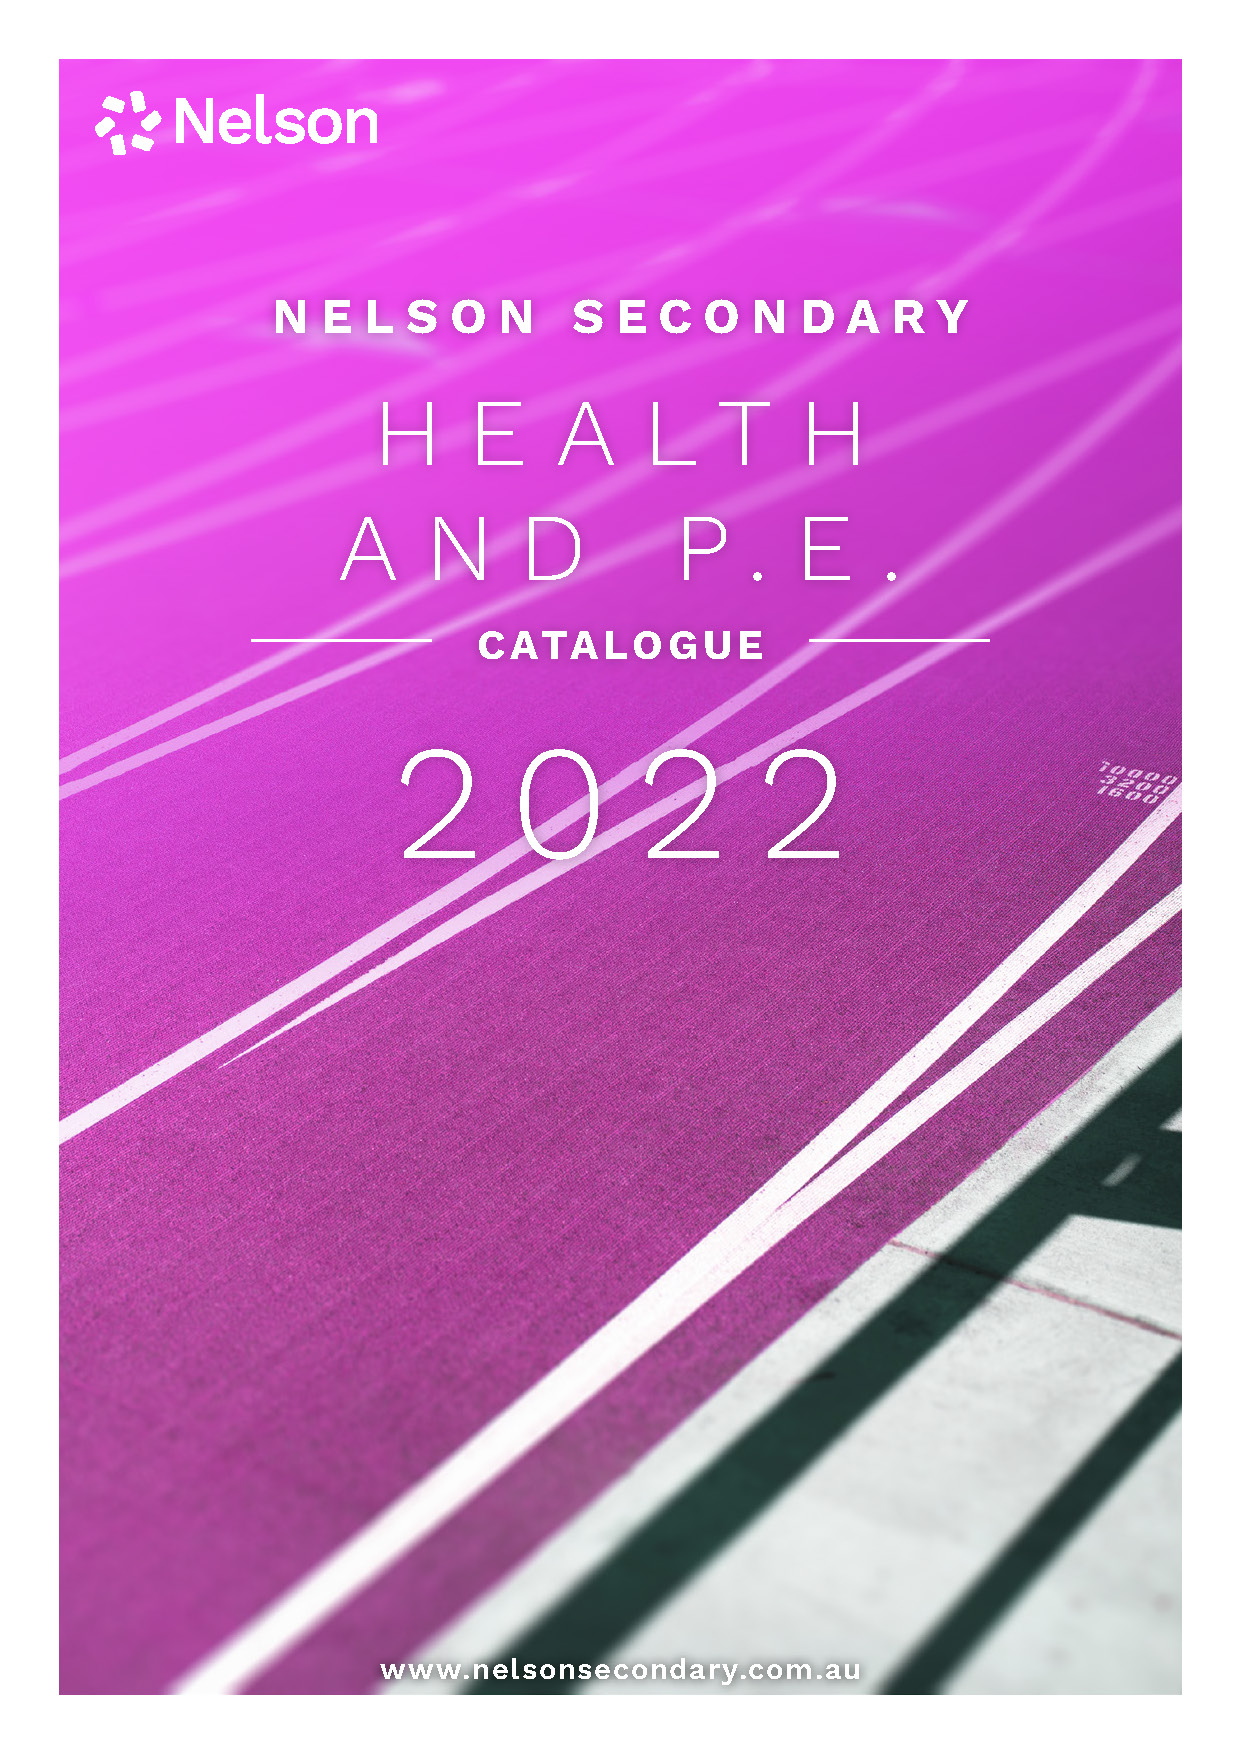 SEC 10173 Catalogue Cover Designs 2022 (1)_Page_7